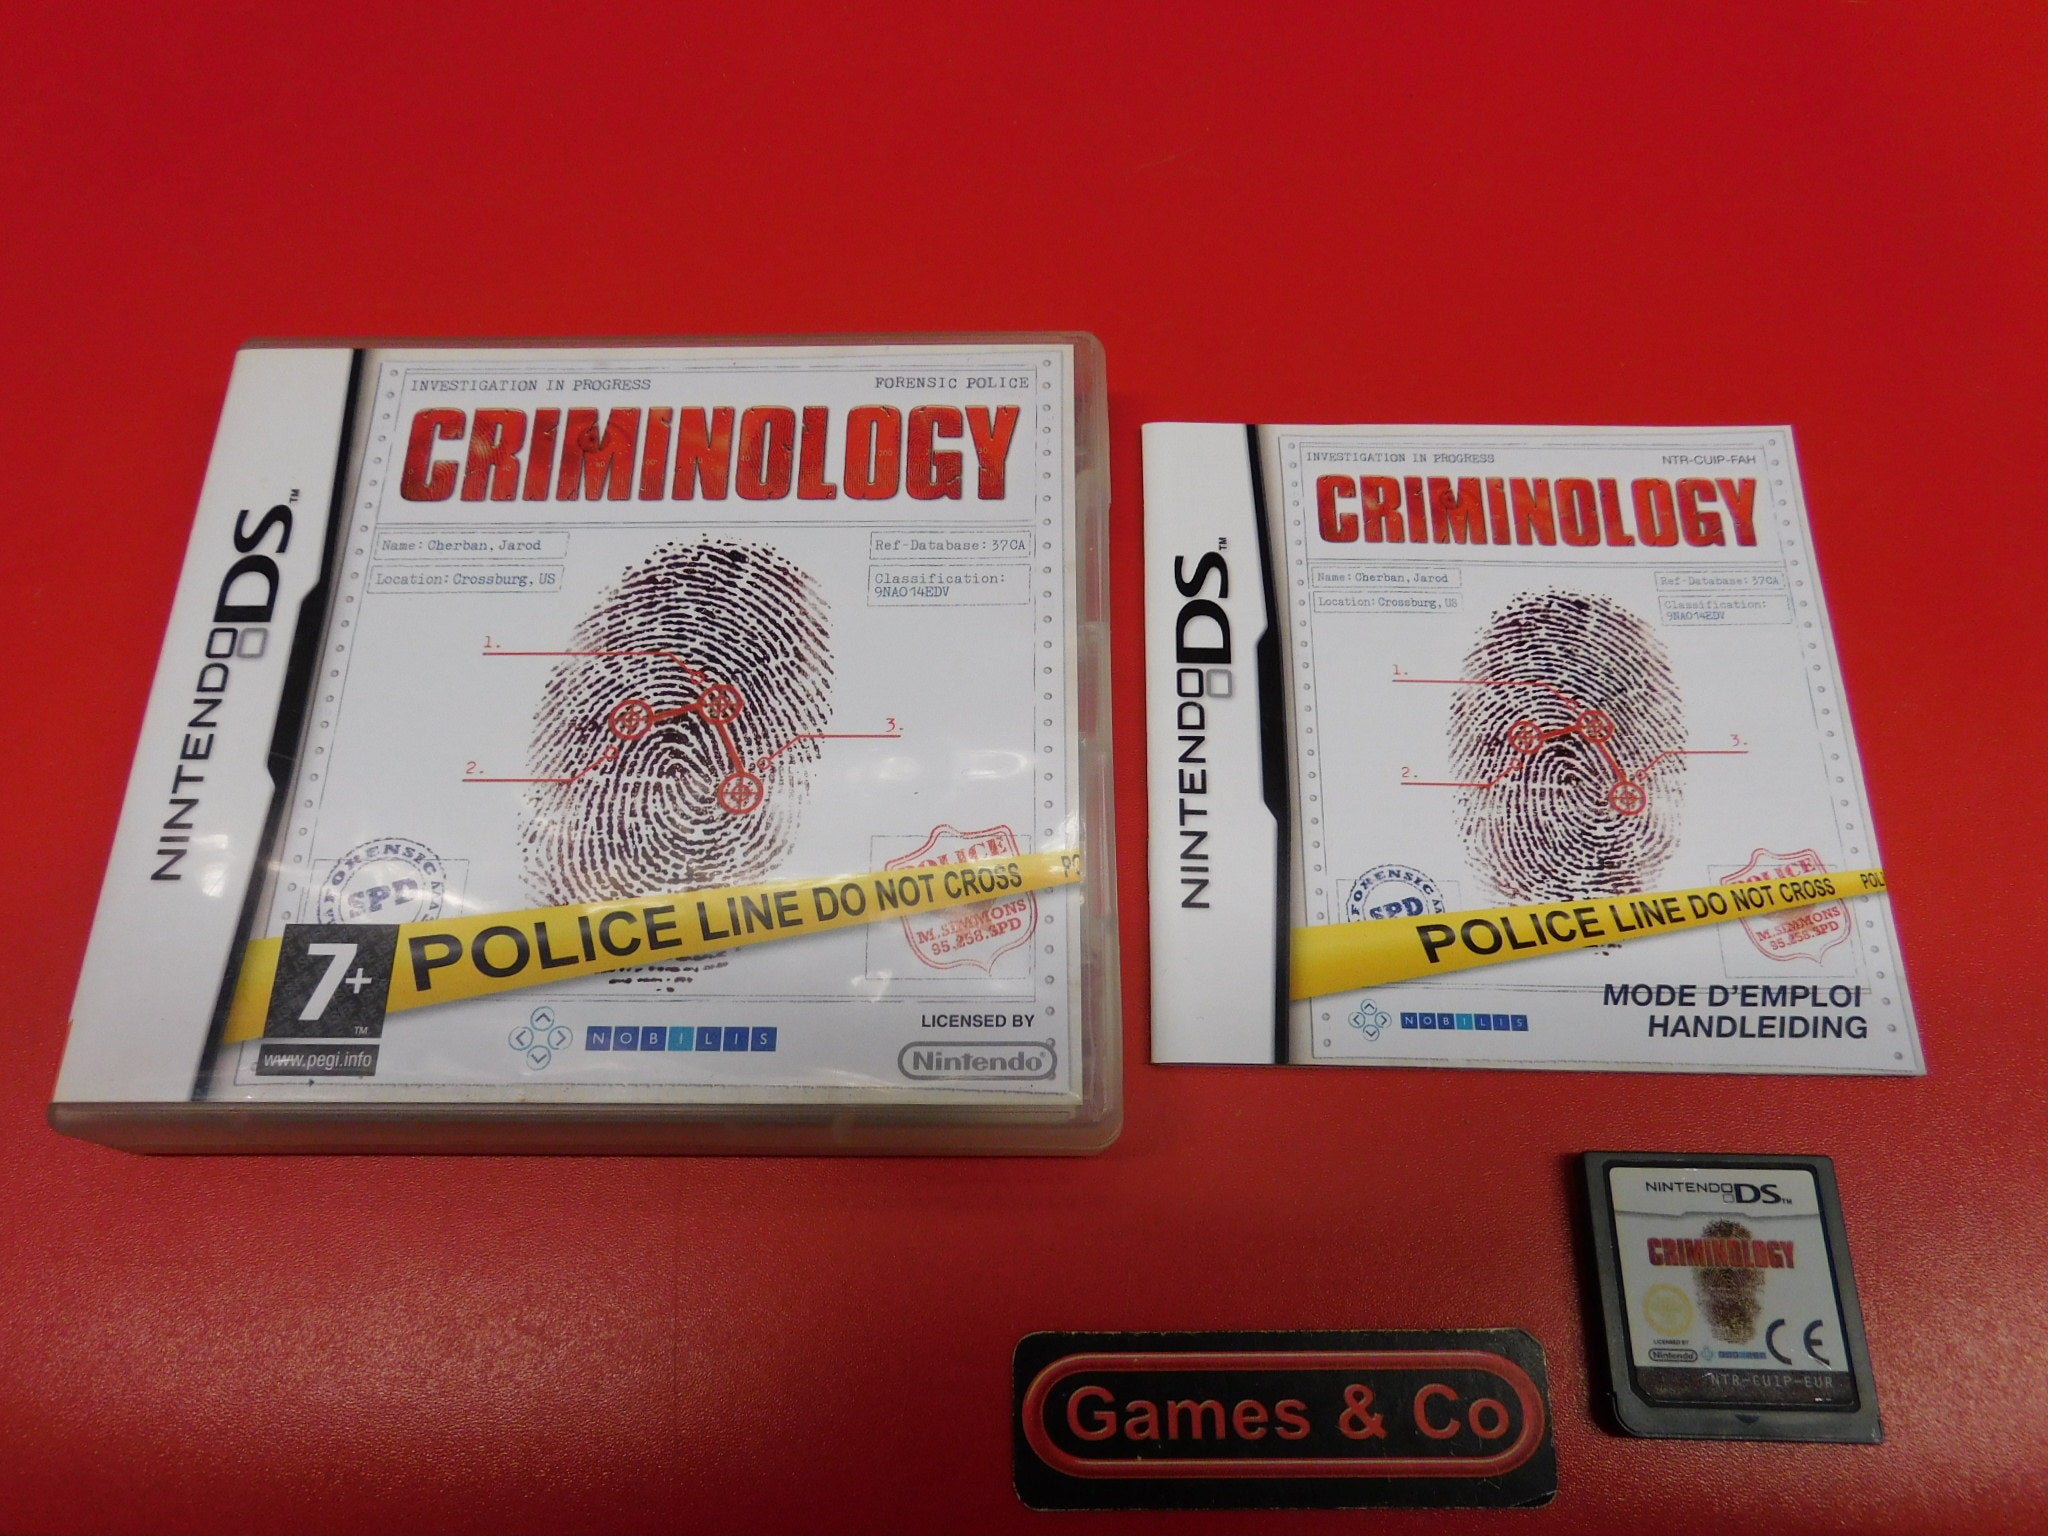 CRIMINOLOGY